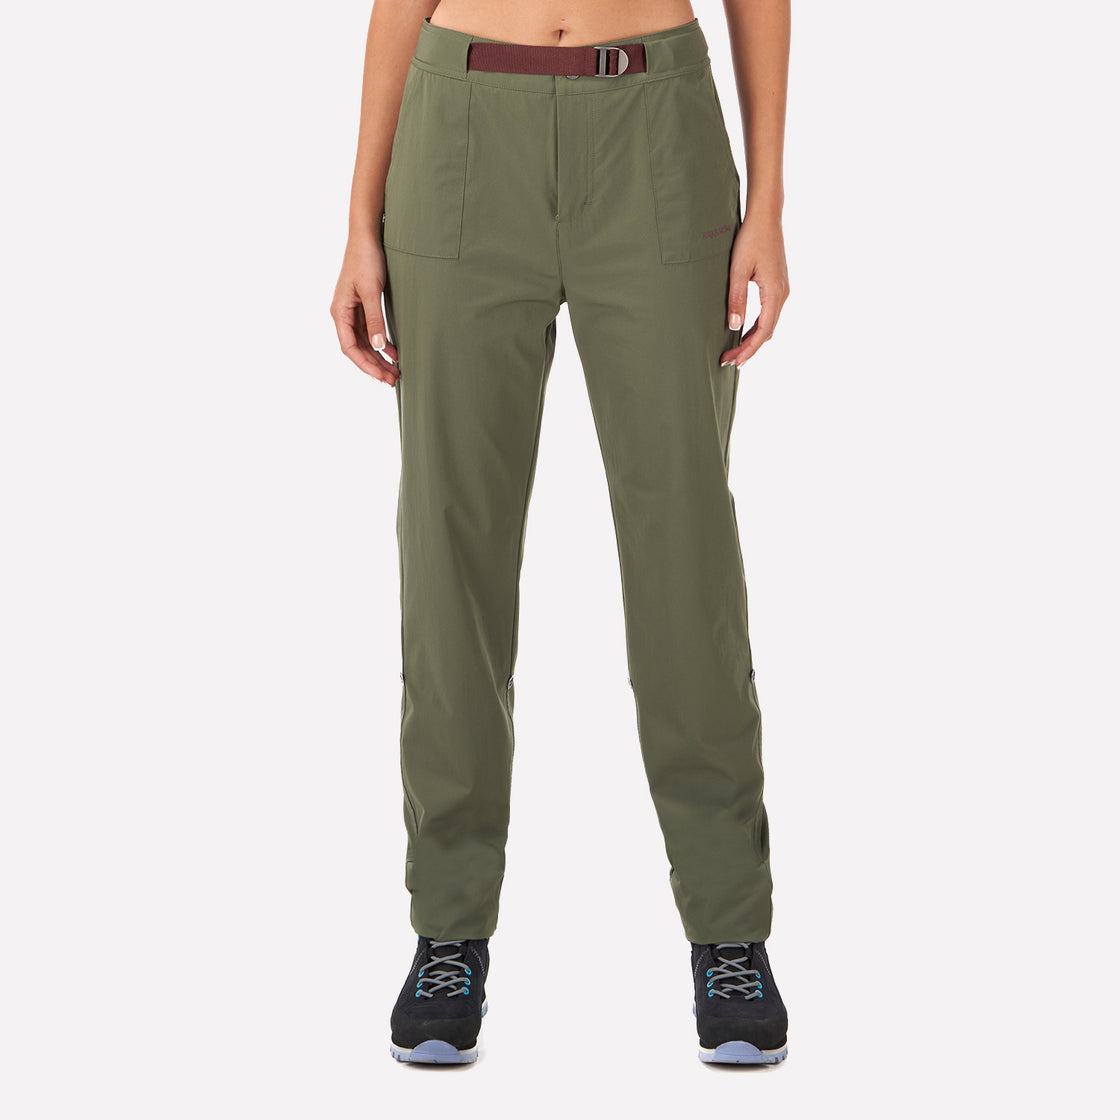 Pantalon Mujer Montatelo Verde Militar Haka Honu